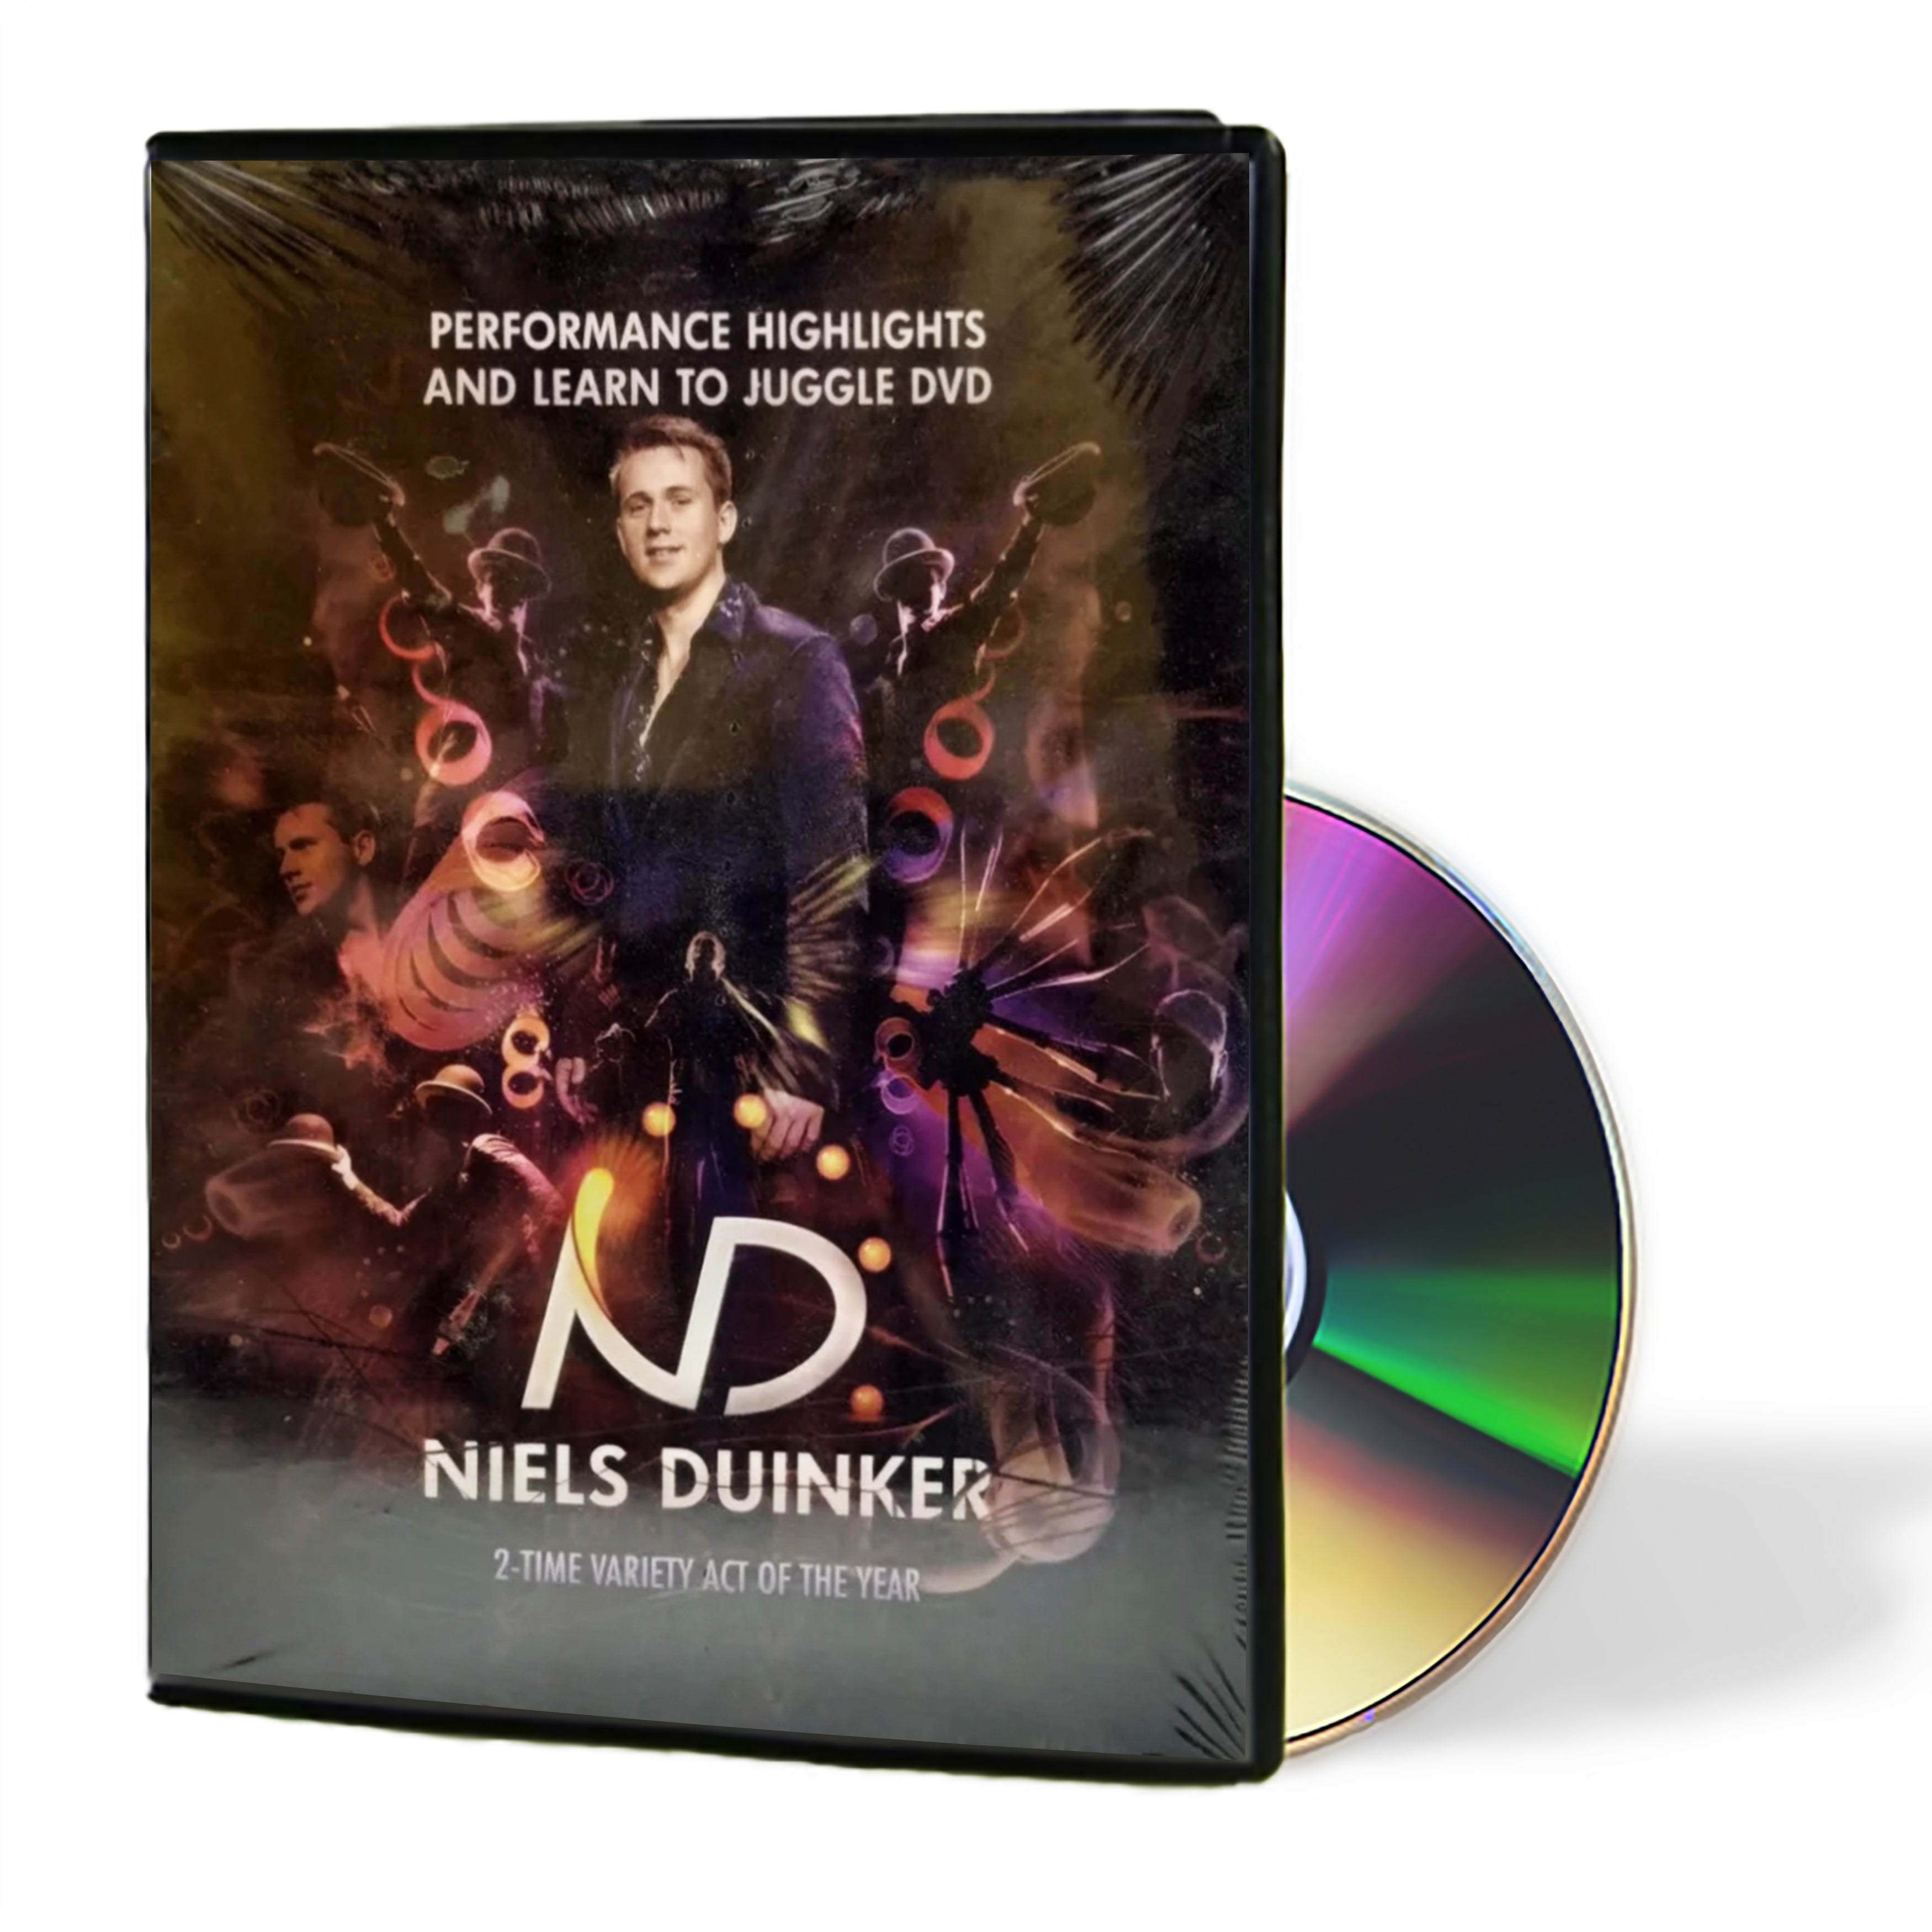 Learn To Juggle by Niels Duinker - DVD